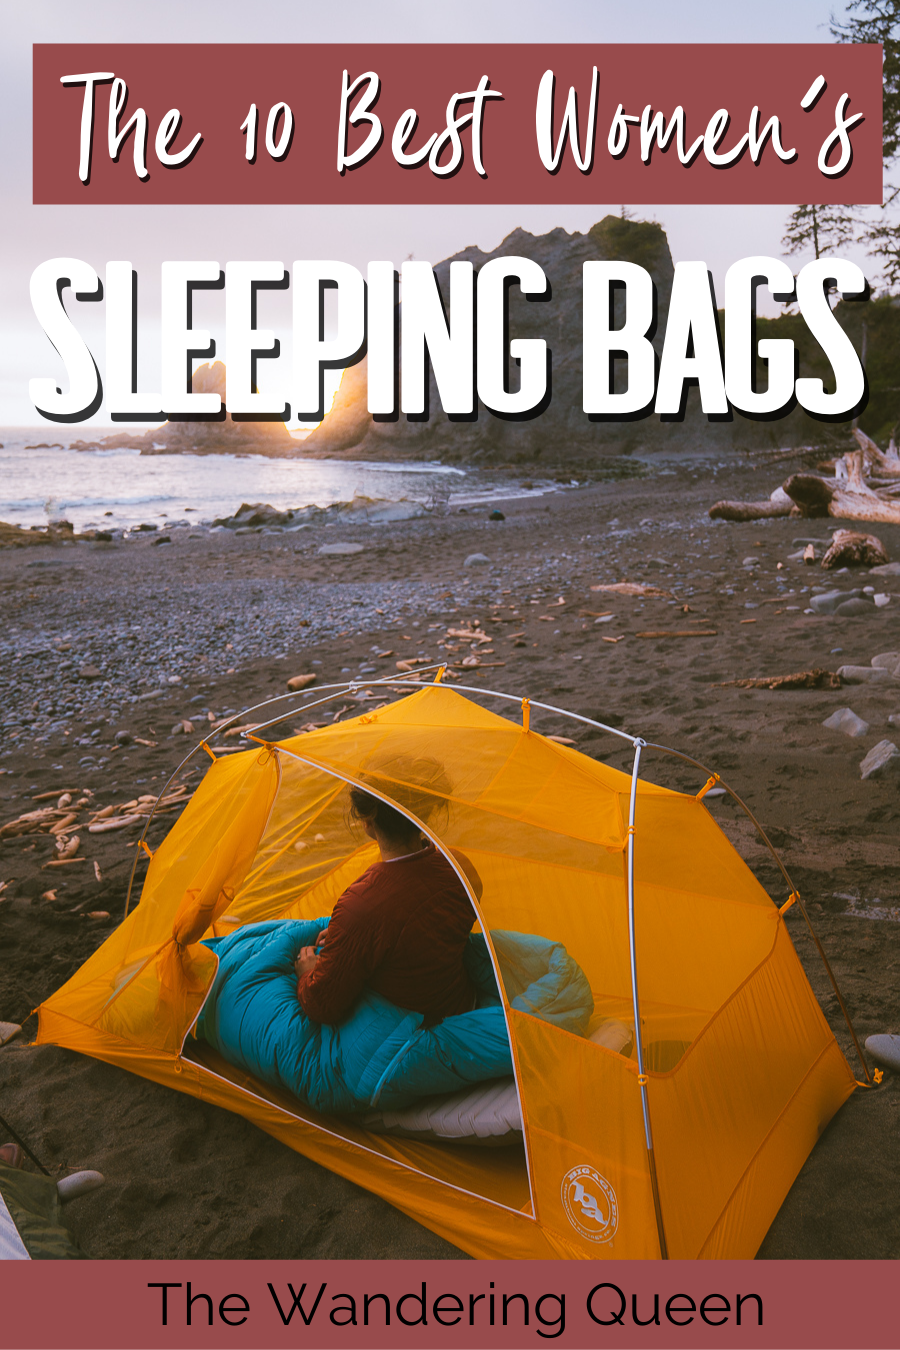 NEW 30" x 54" Camping Slumber Sleeping Bag with Backpack Purplicious Girl Age 3 